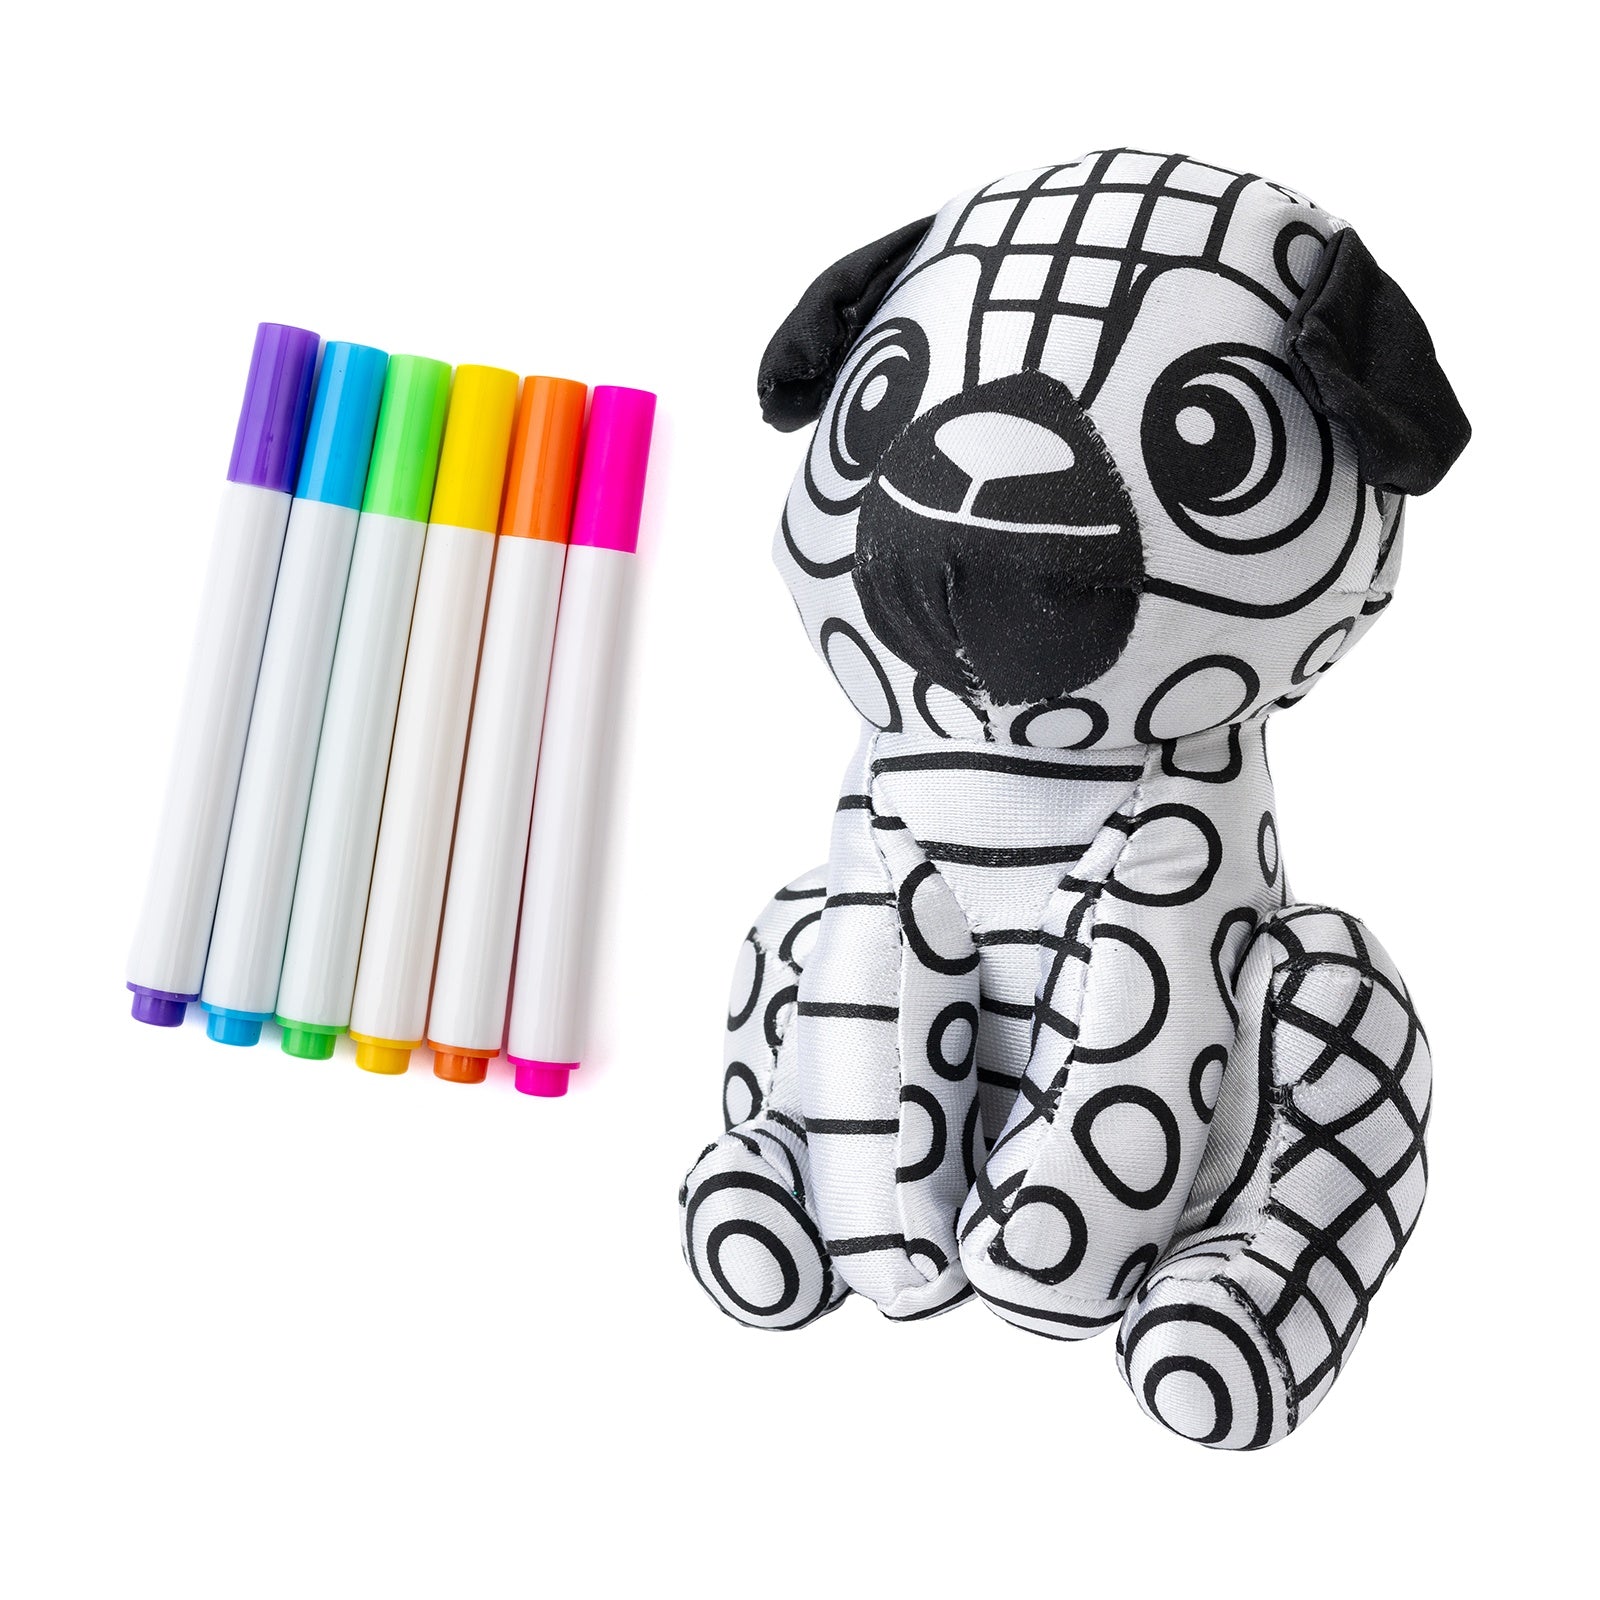 Cubo de Colorea tu Mascota - varios modelos - Manualidades - Comprar en Fnac